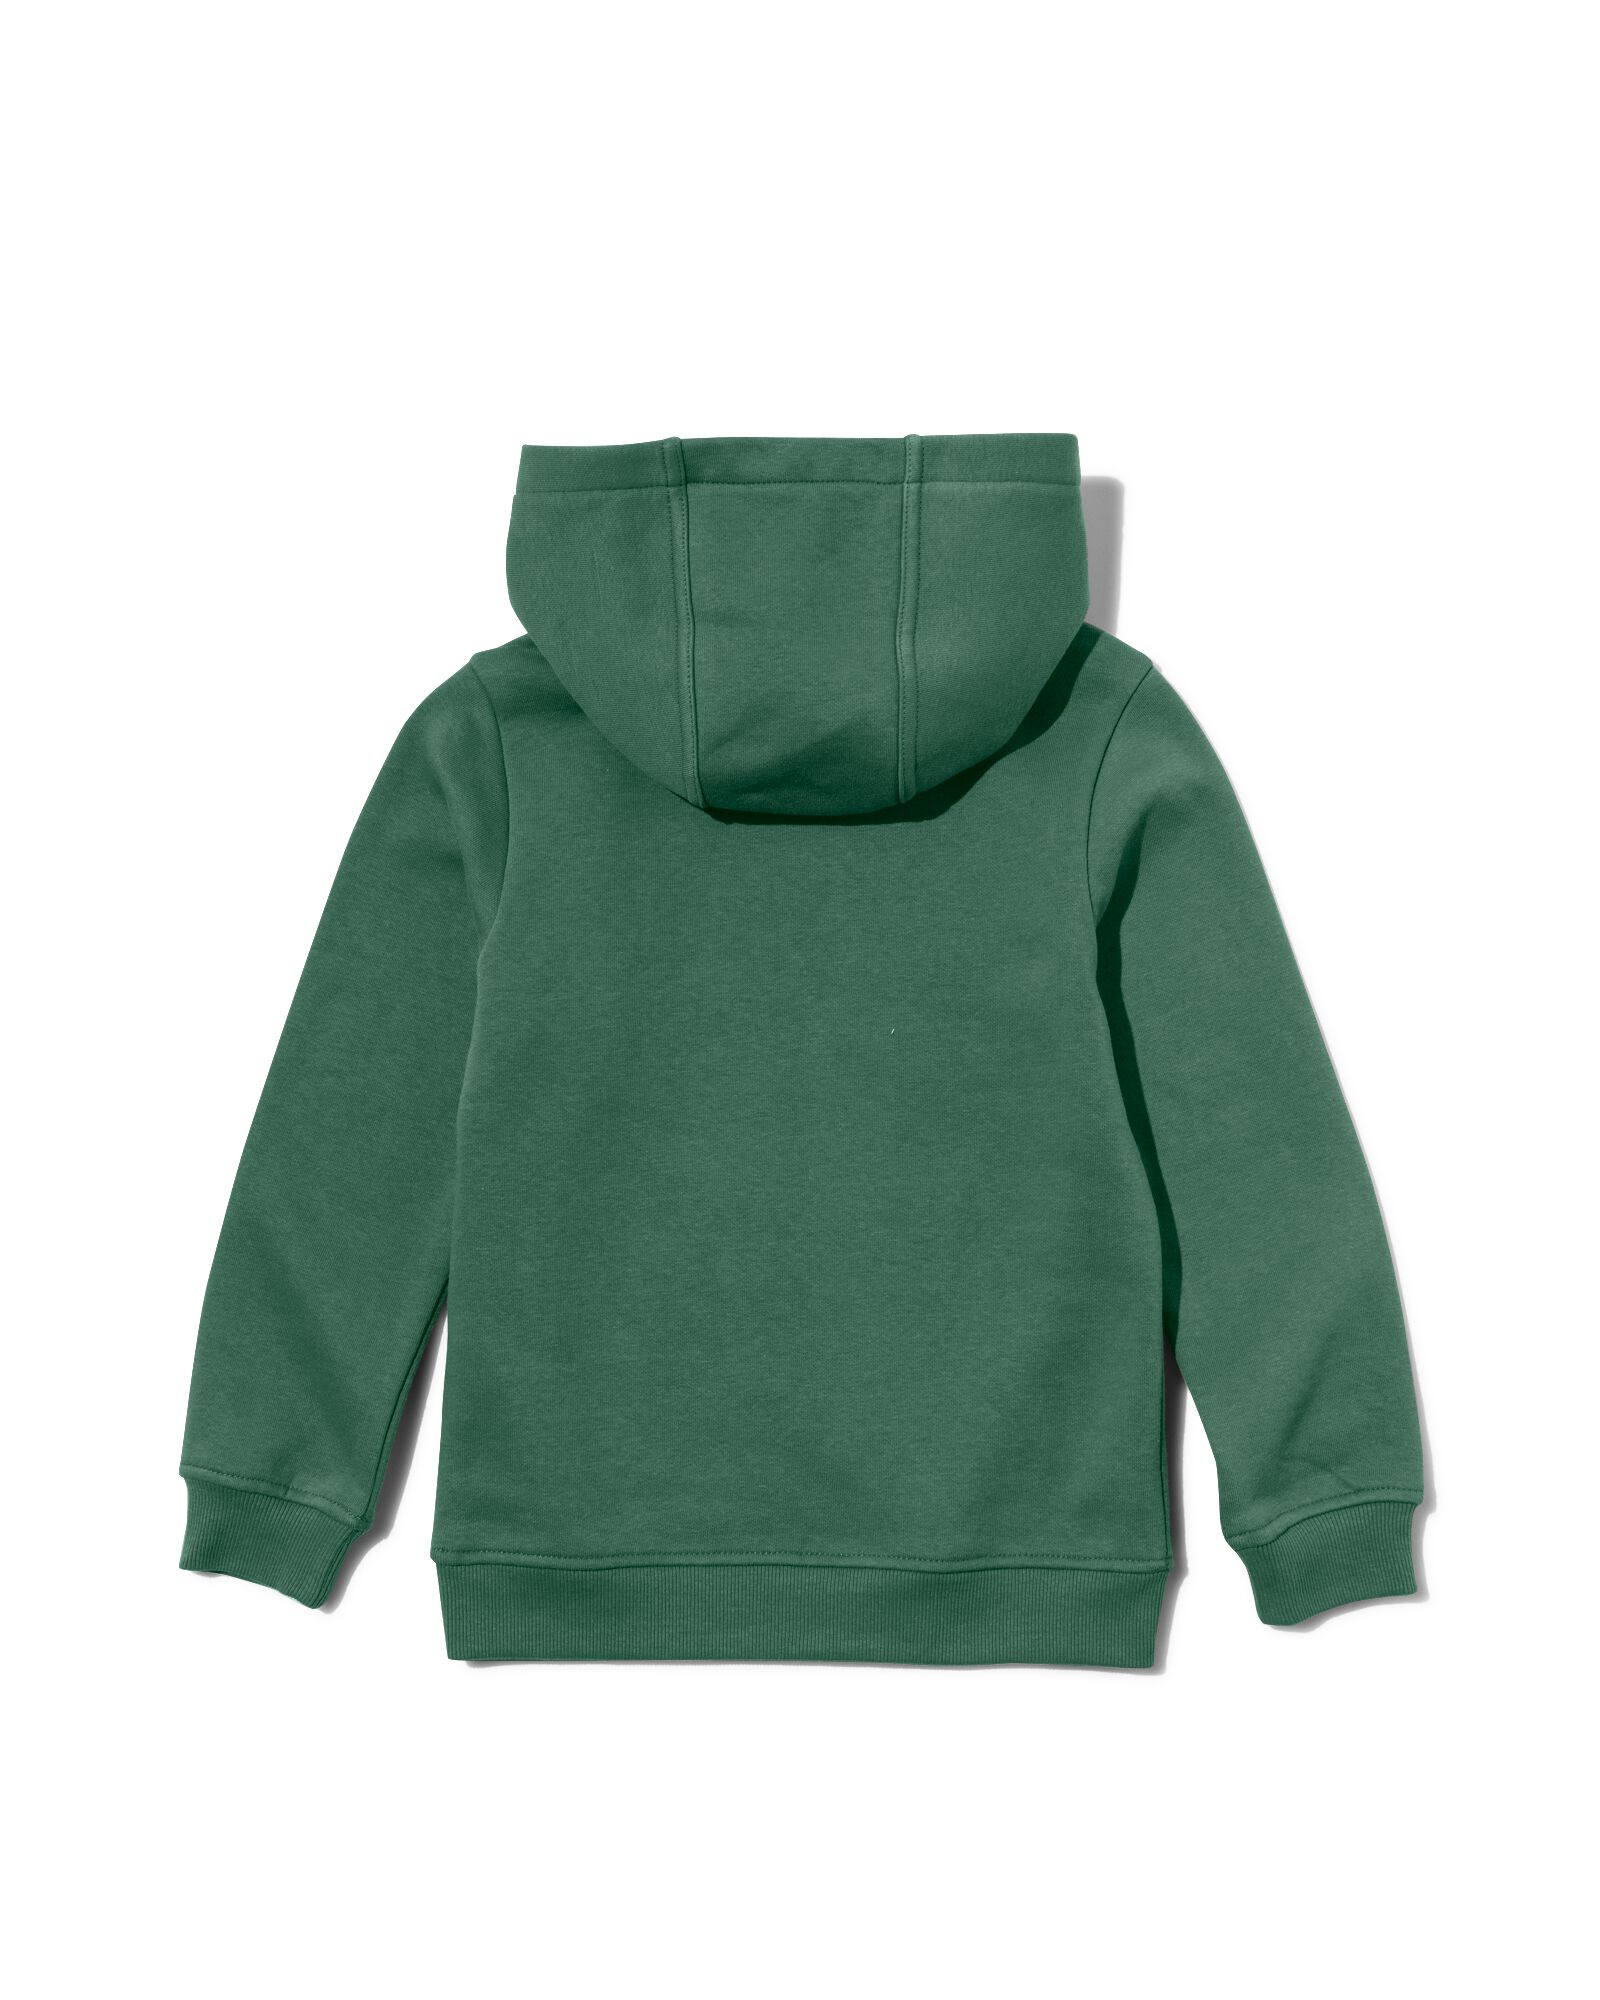 Kinder-Kapuzenshirt grün grün - 1000029791 - HEMA